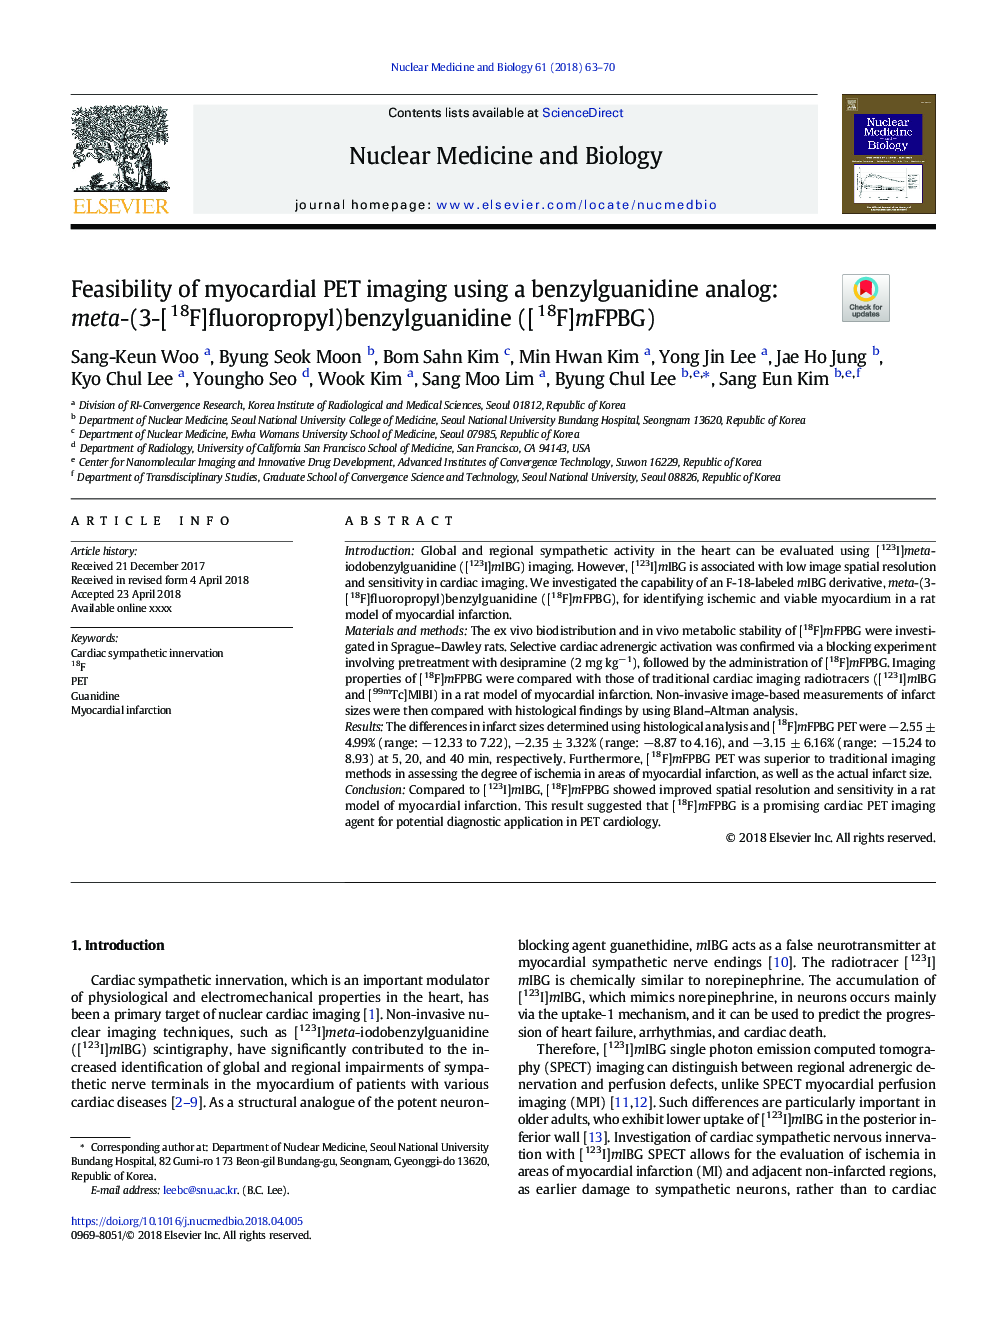 Feasibility of myocardial PET imaging using a benzylguanidine analog: meta-(3-[18F]fluoropropyl)benzylguanidine ([18F]mFPBG)